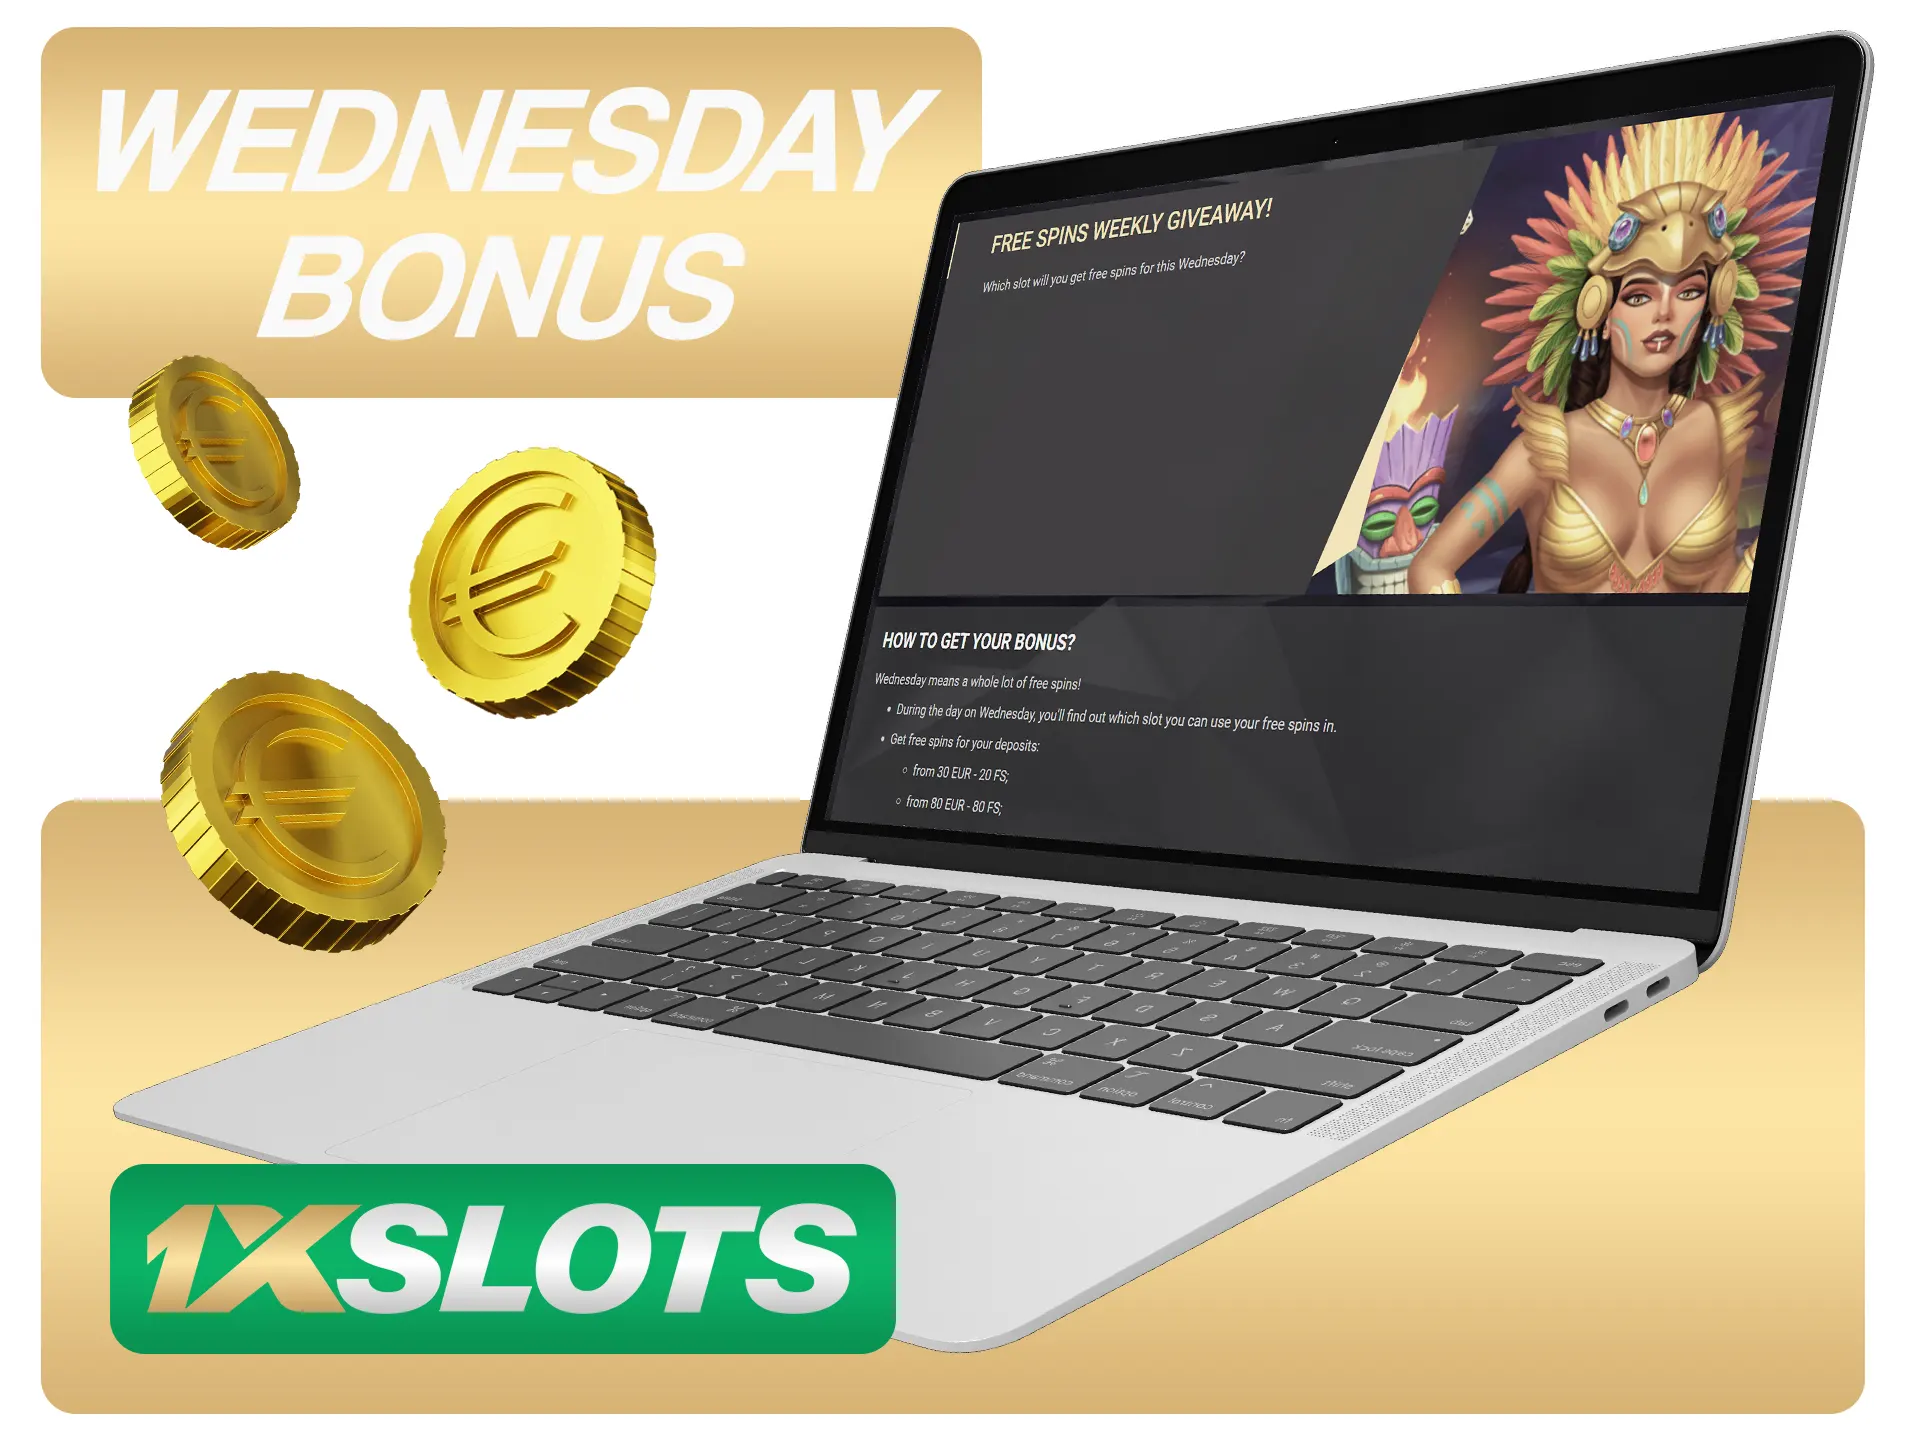 Make free spins each week with 1xSlots wednesday bonus.